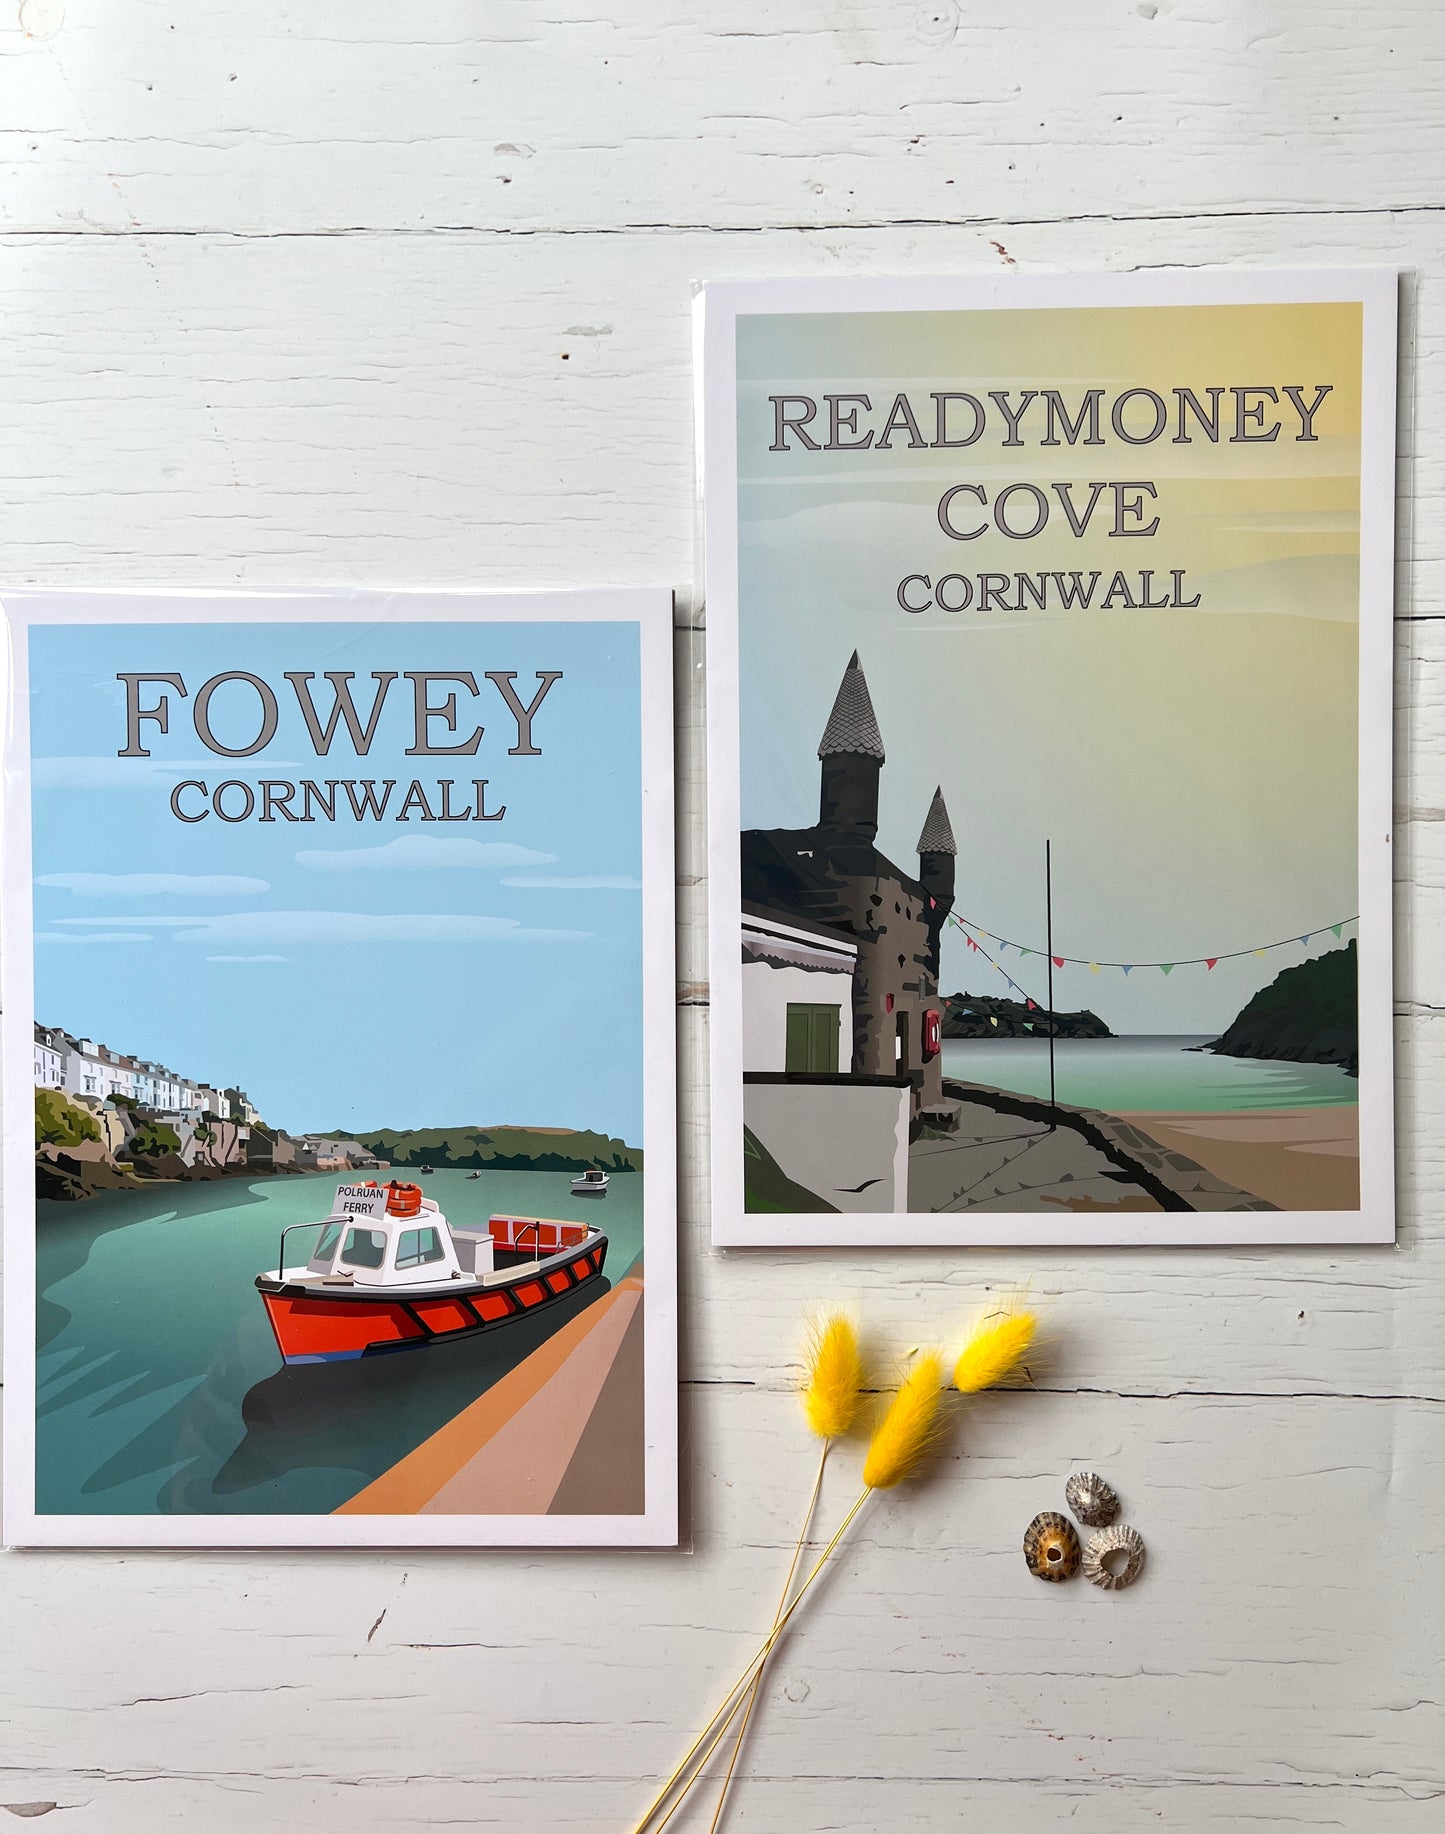 Readymoney Cove & Fowey Cornwall Digital Art Prints in A4 and A3